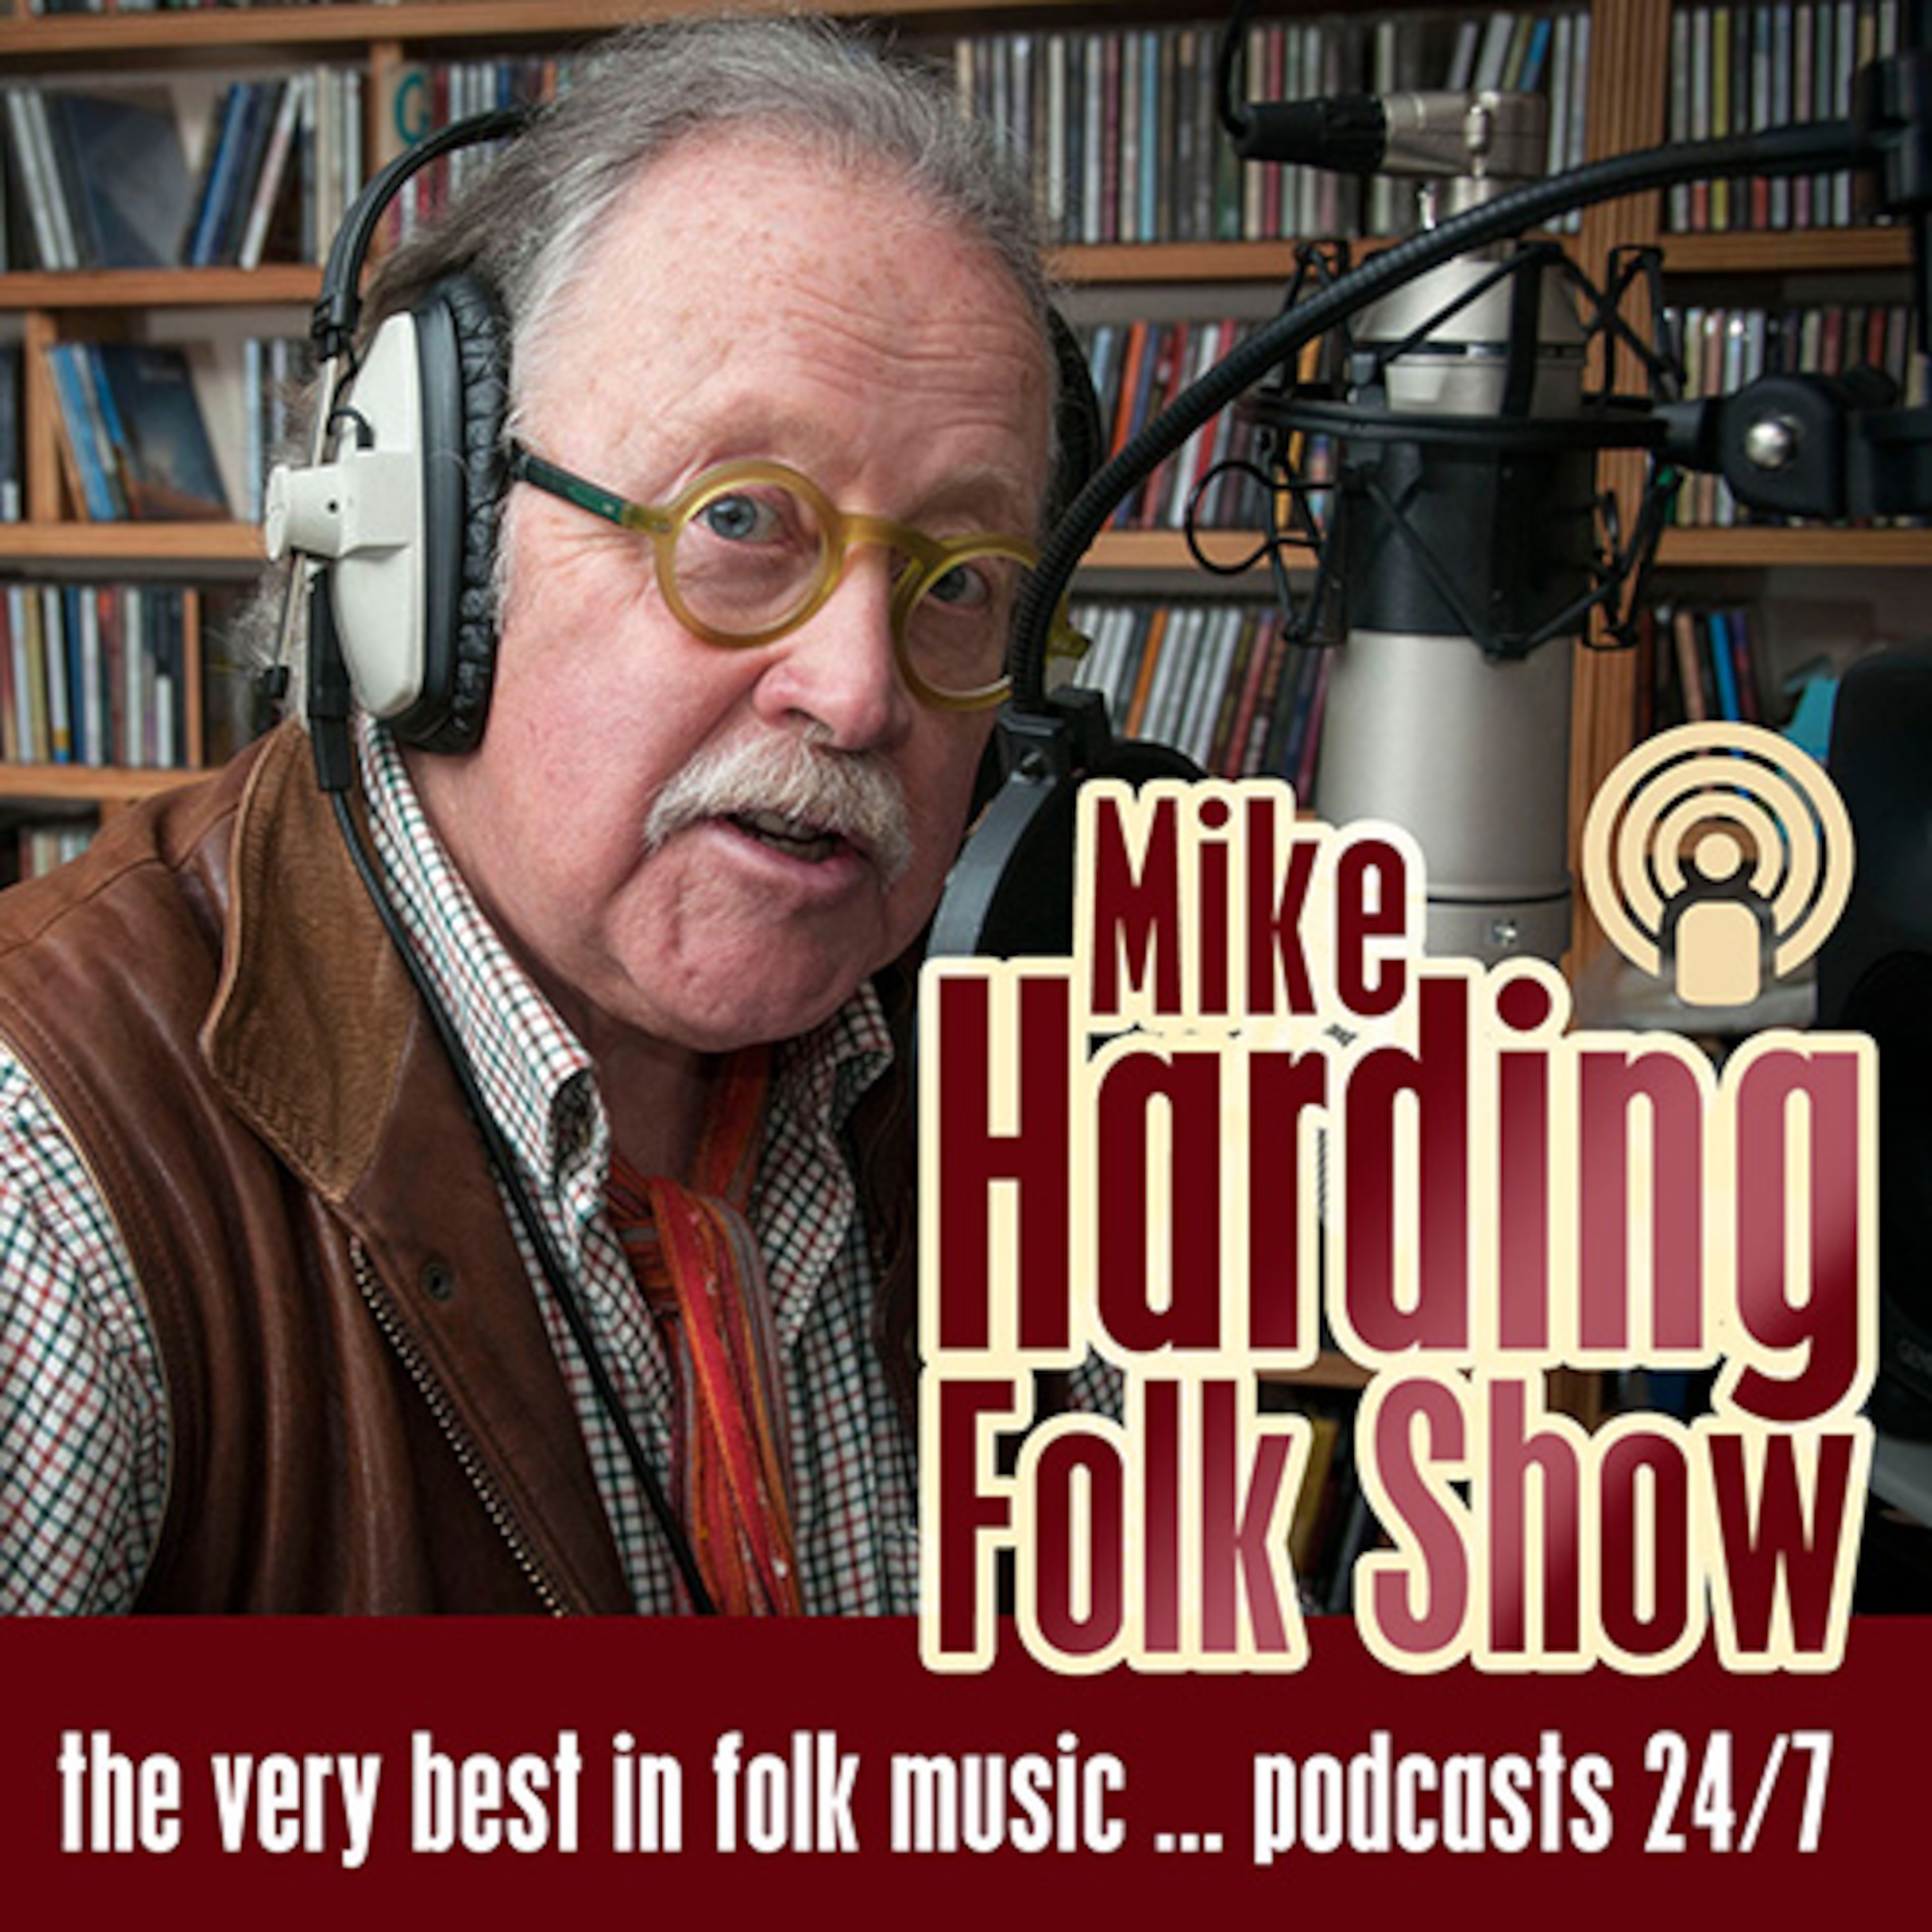 Mike Harding Folk Show 163